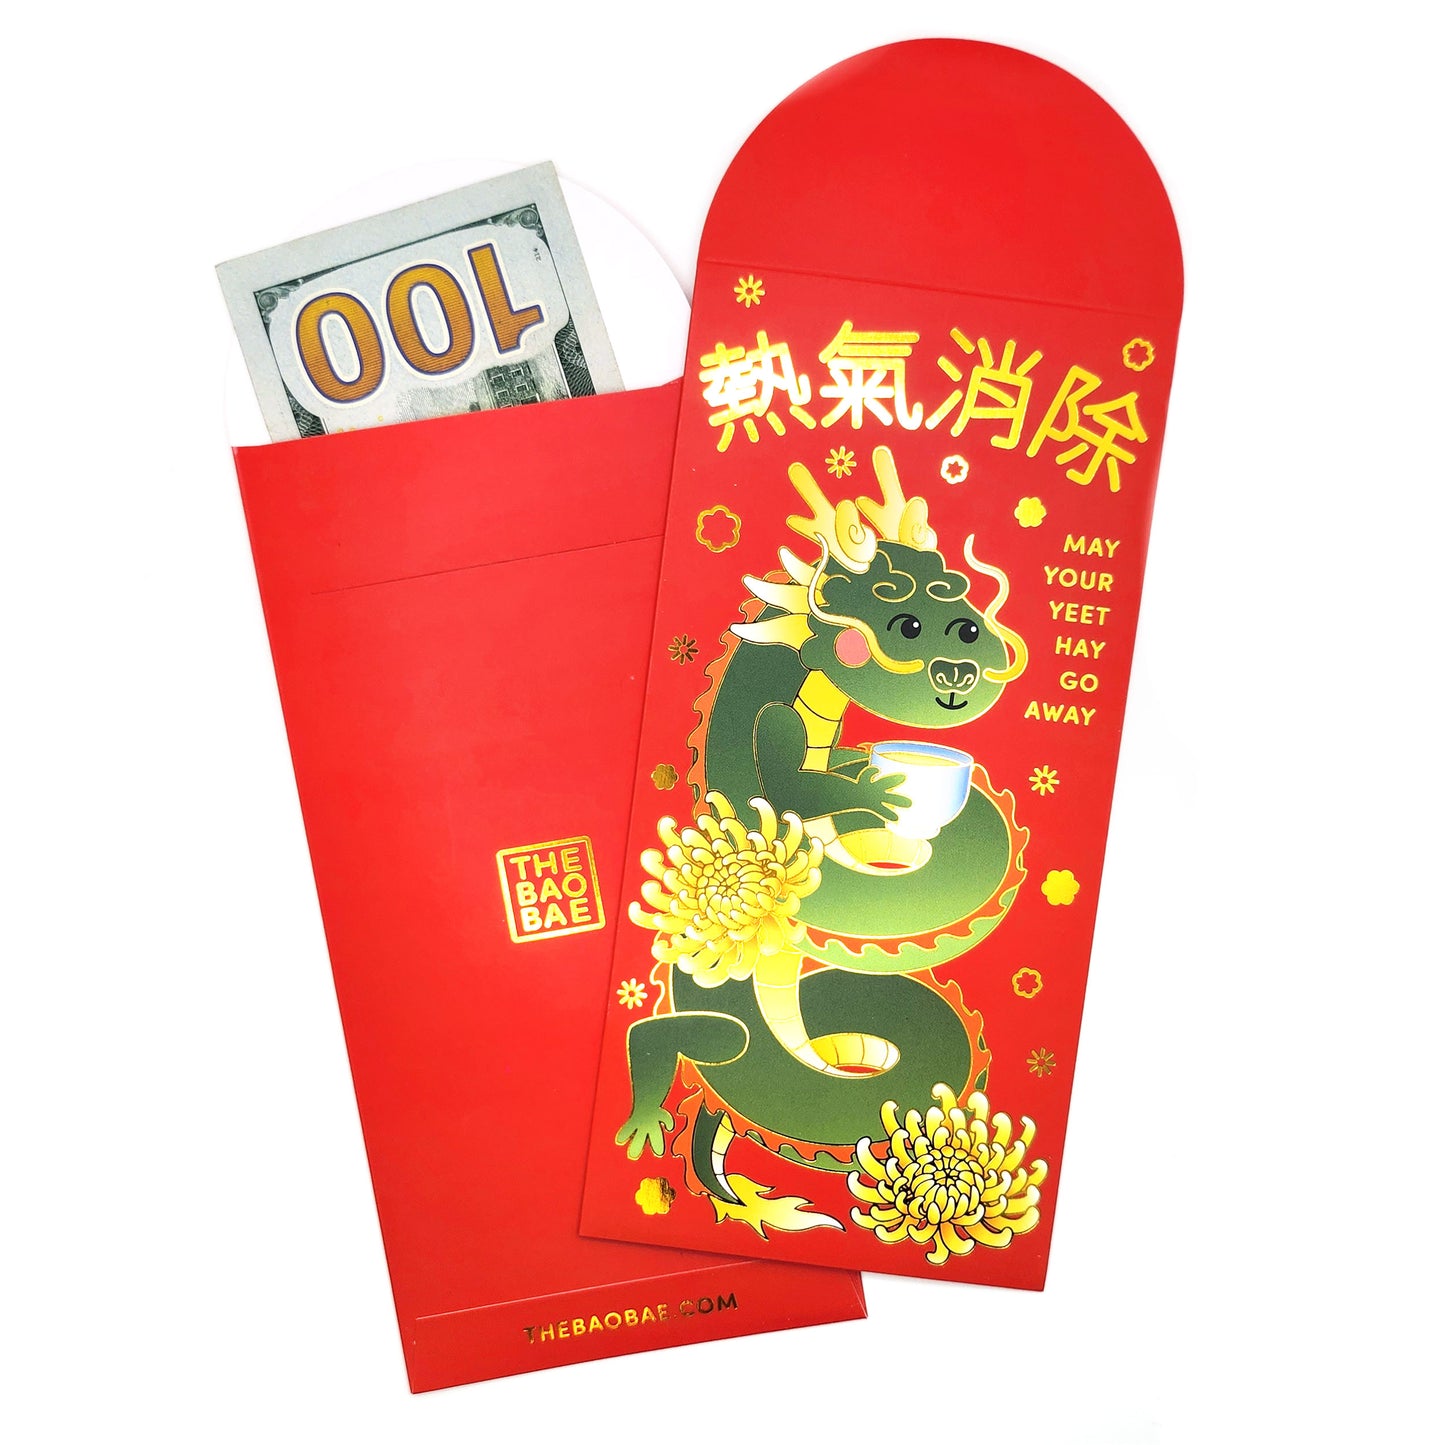 Year of the Dragon Red Envelope 熱氣消除 "Yeet Hay Go Away"